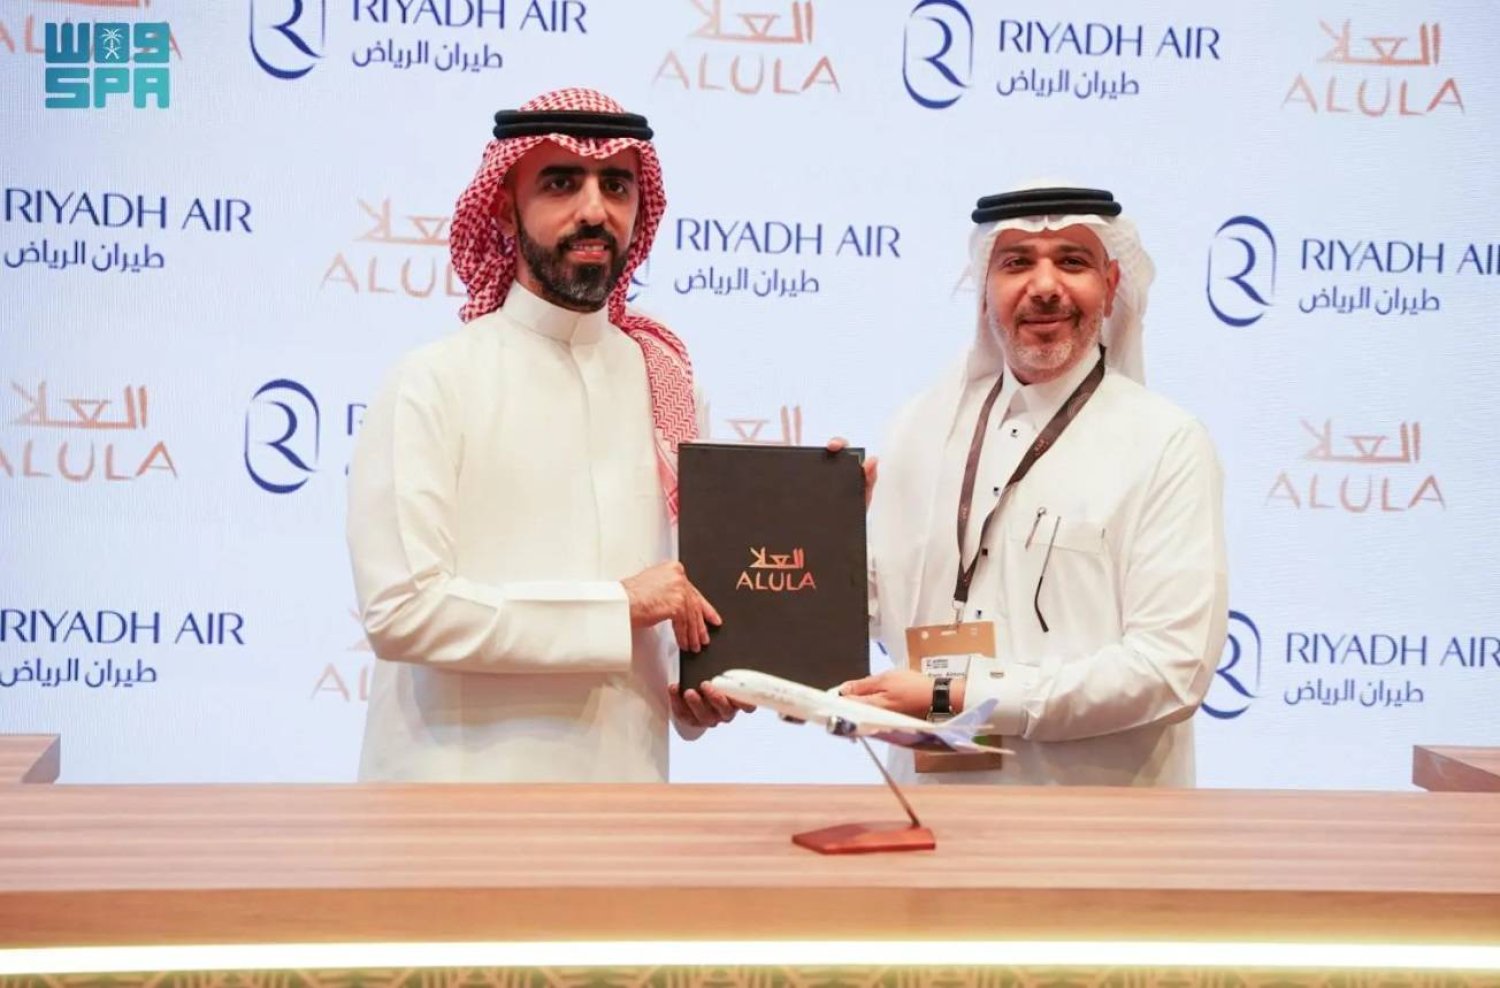 AlUla entered into a strategic partnership with Riyadh Air. SPA